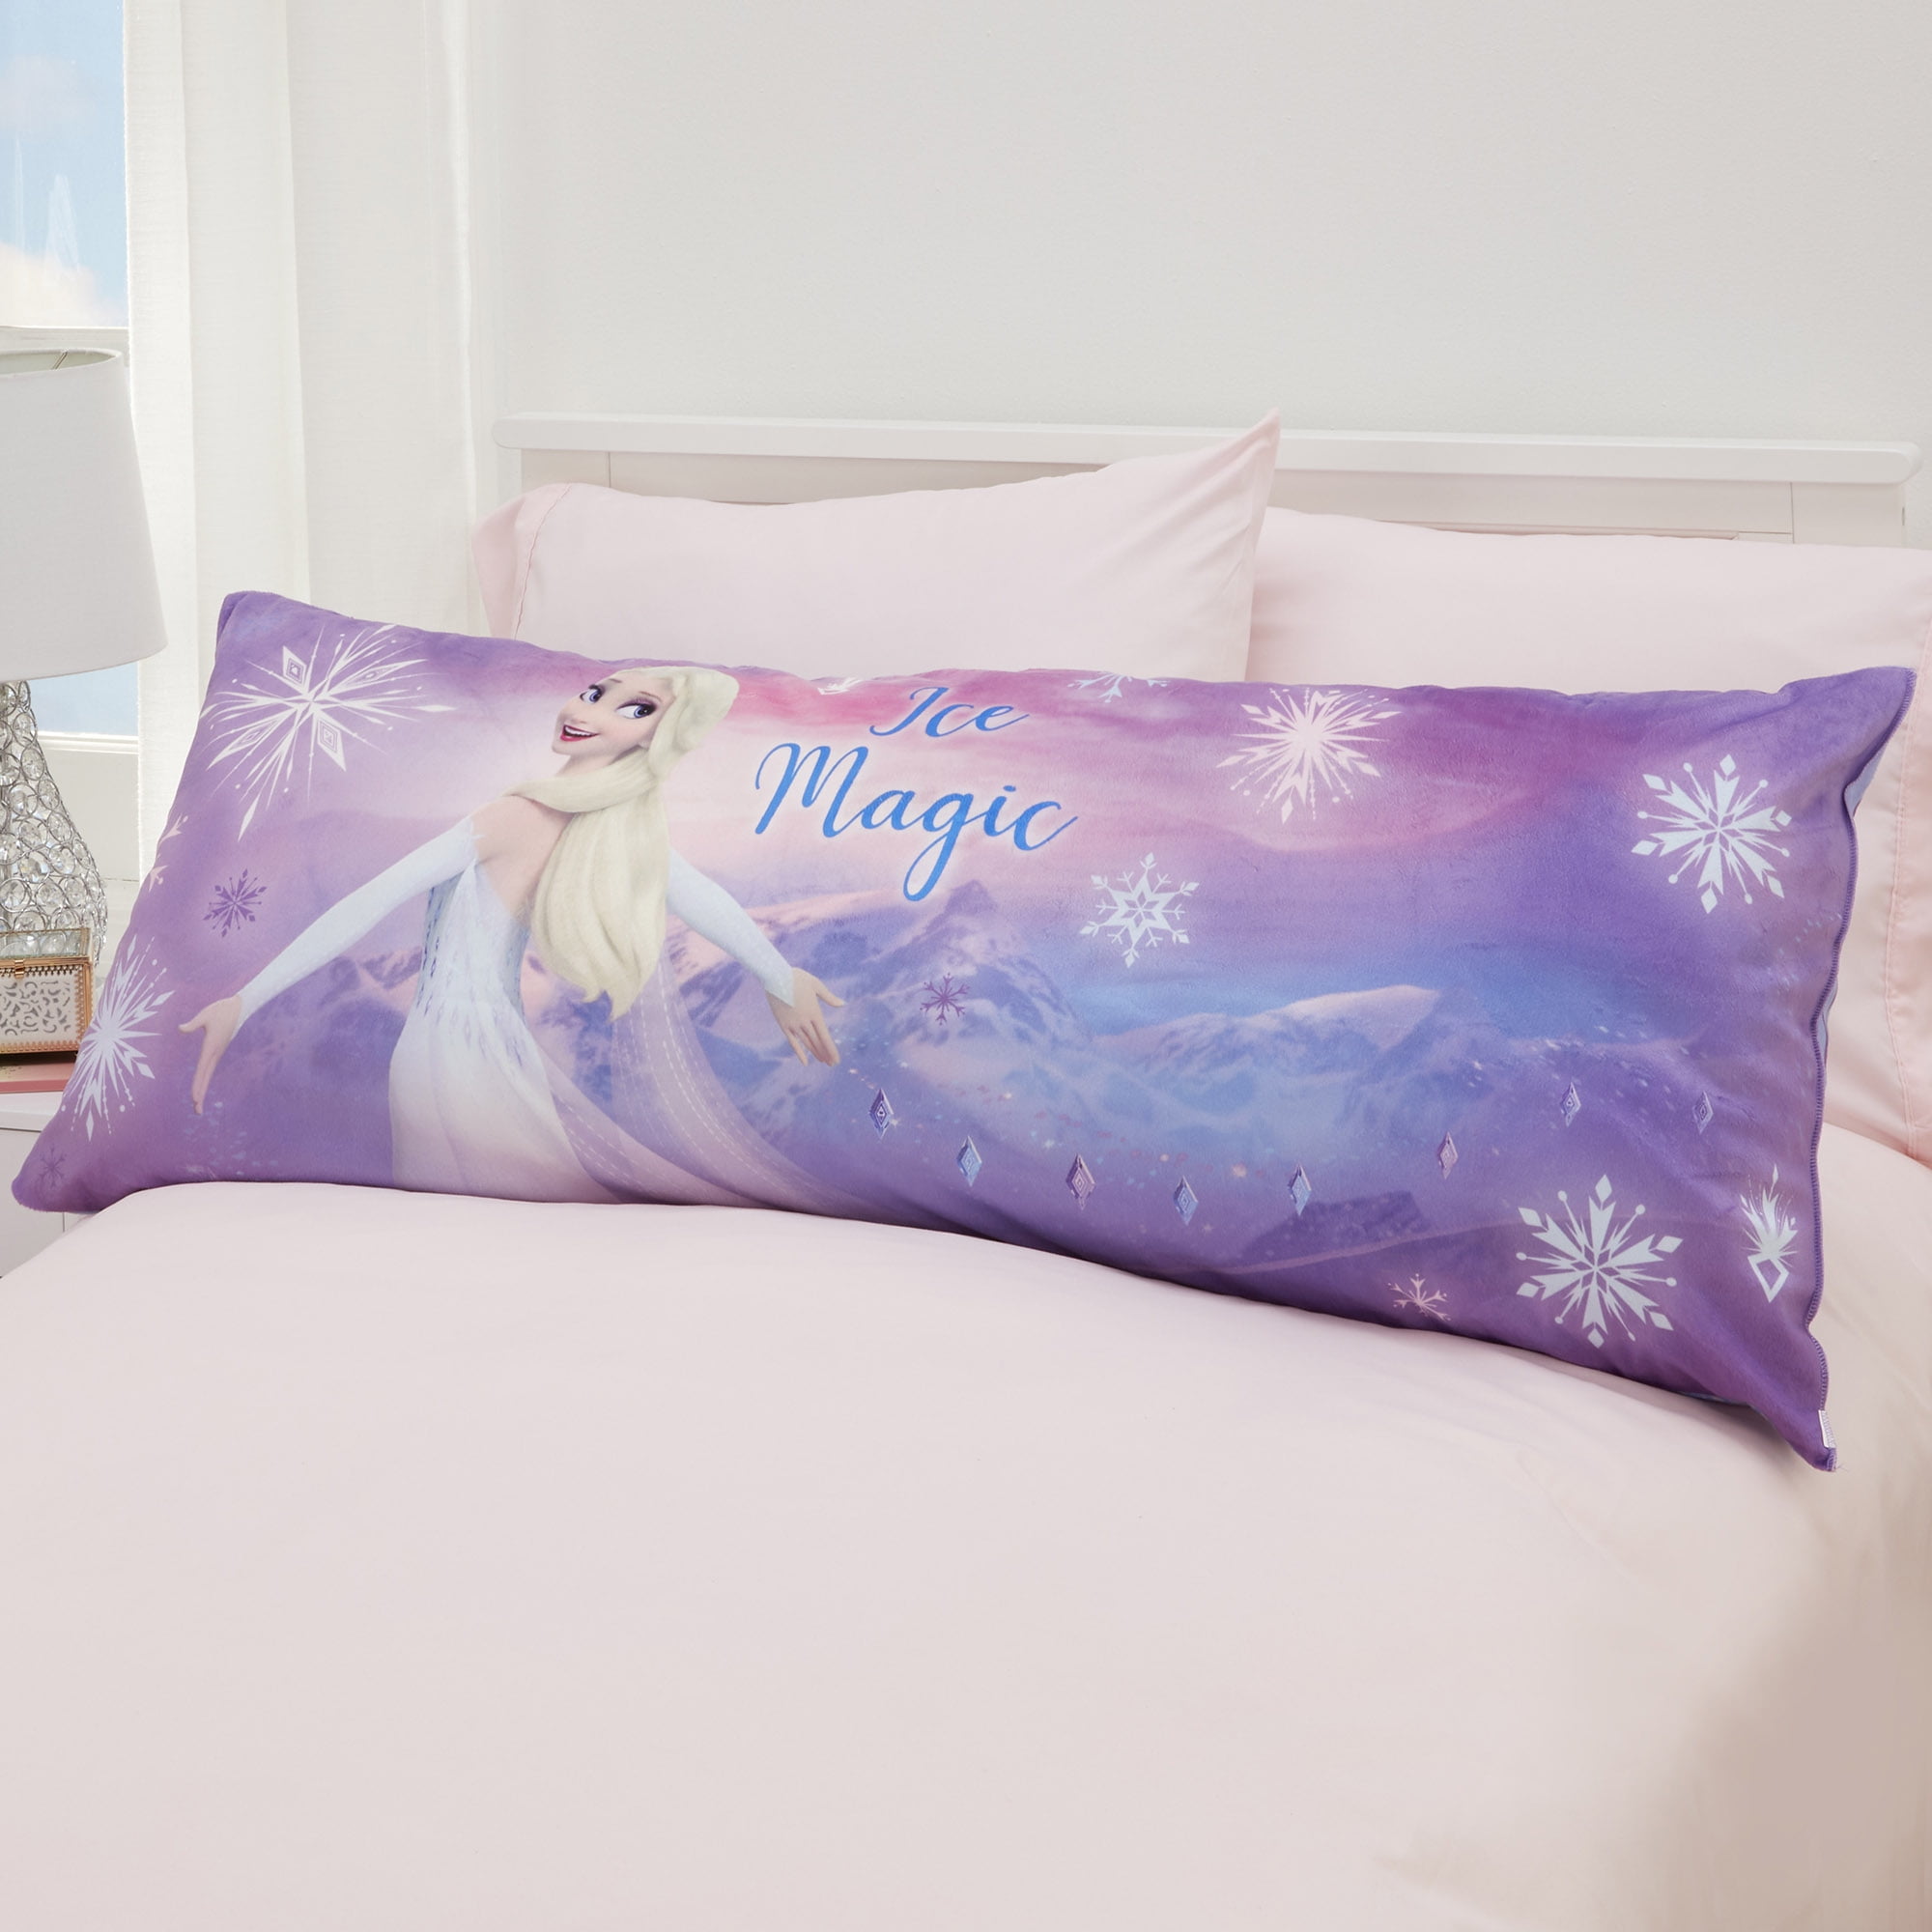 Disney Frozen Kids Body Pillow, Extra Large 4-Feet Long, Reversible, Purple